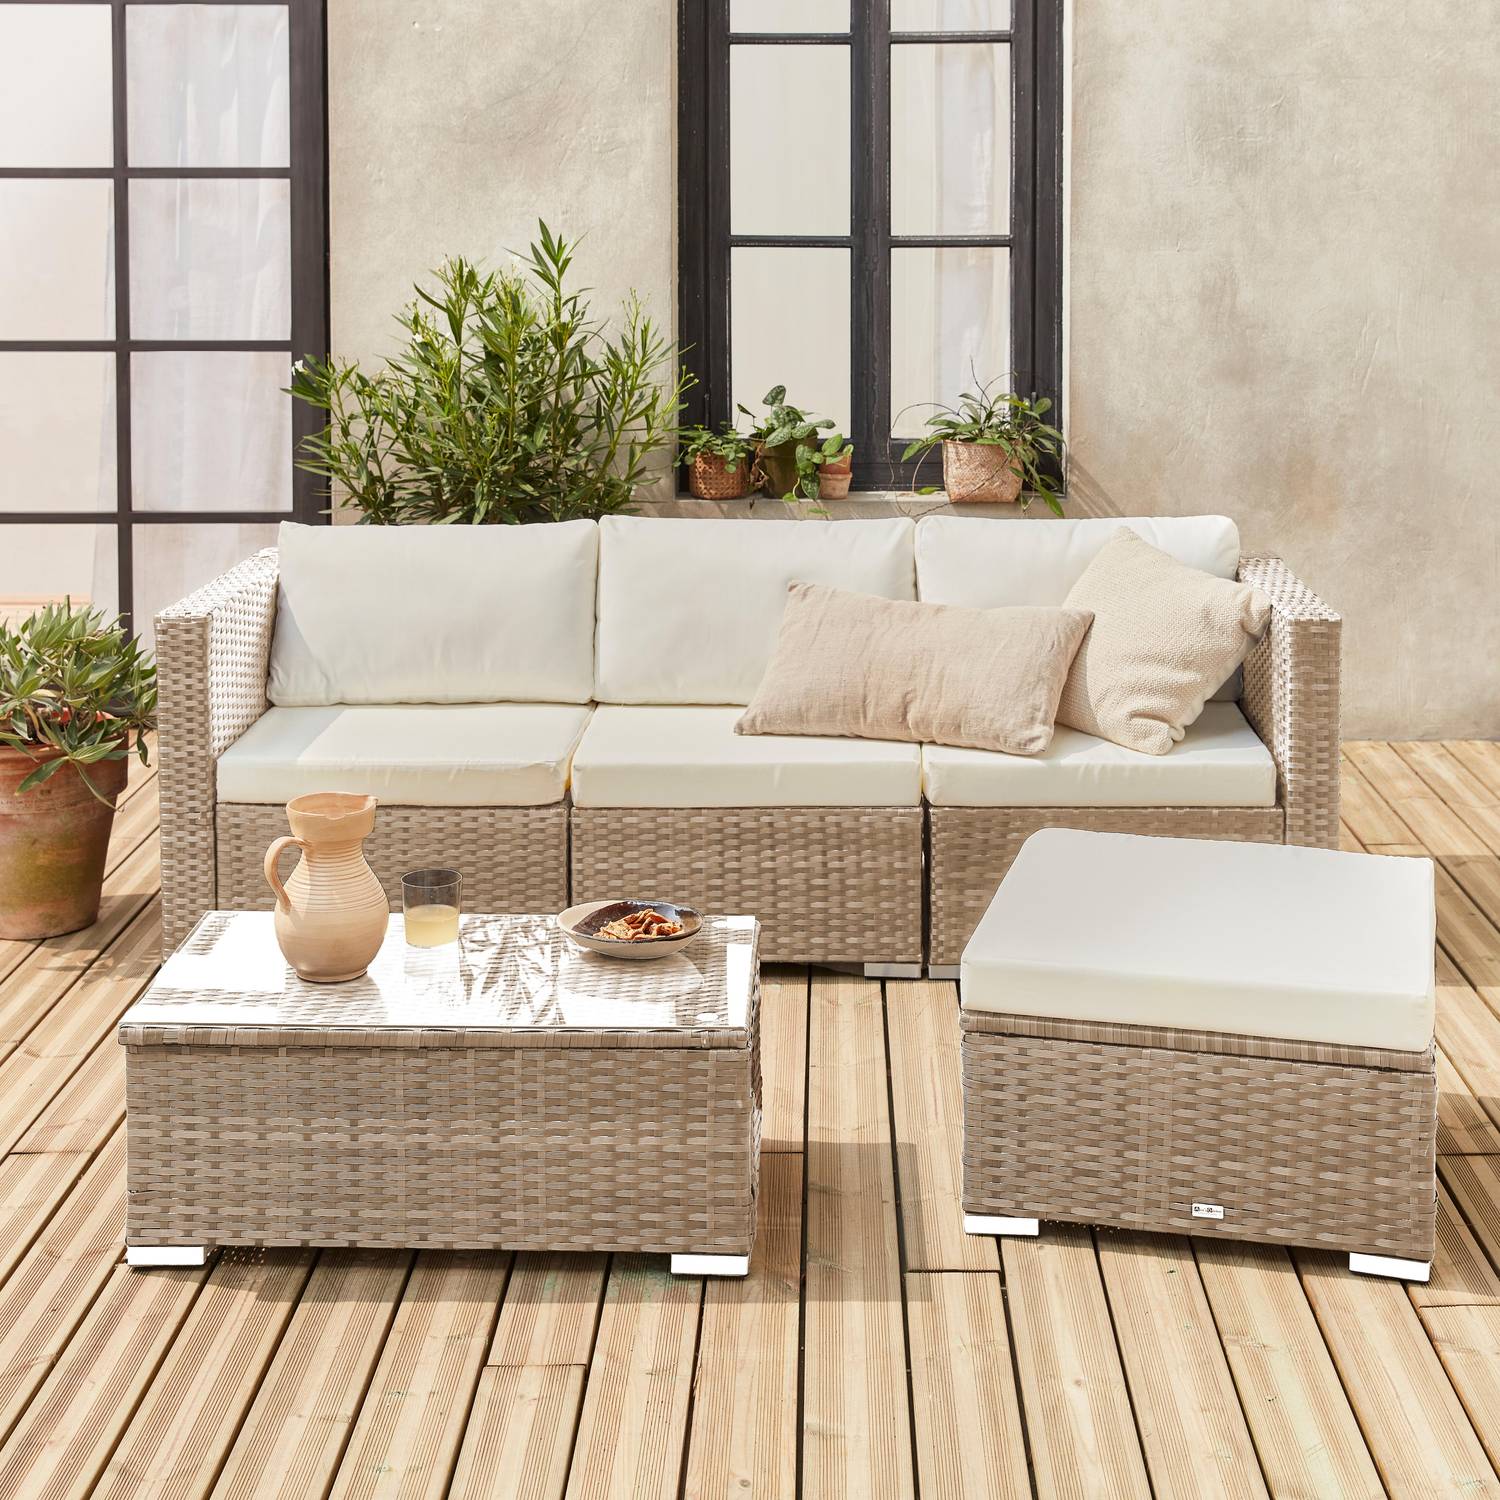 4-seater rattan garden sofa set - sofa, footrest, coffee table - Torino - Beige Photo1